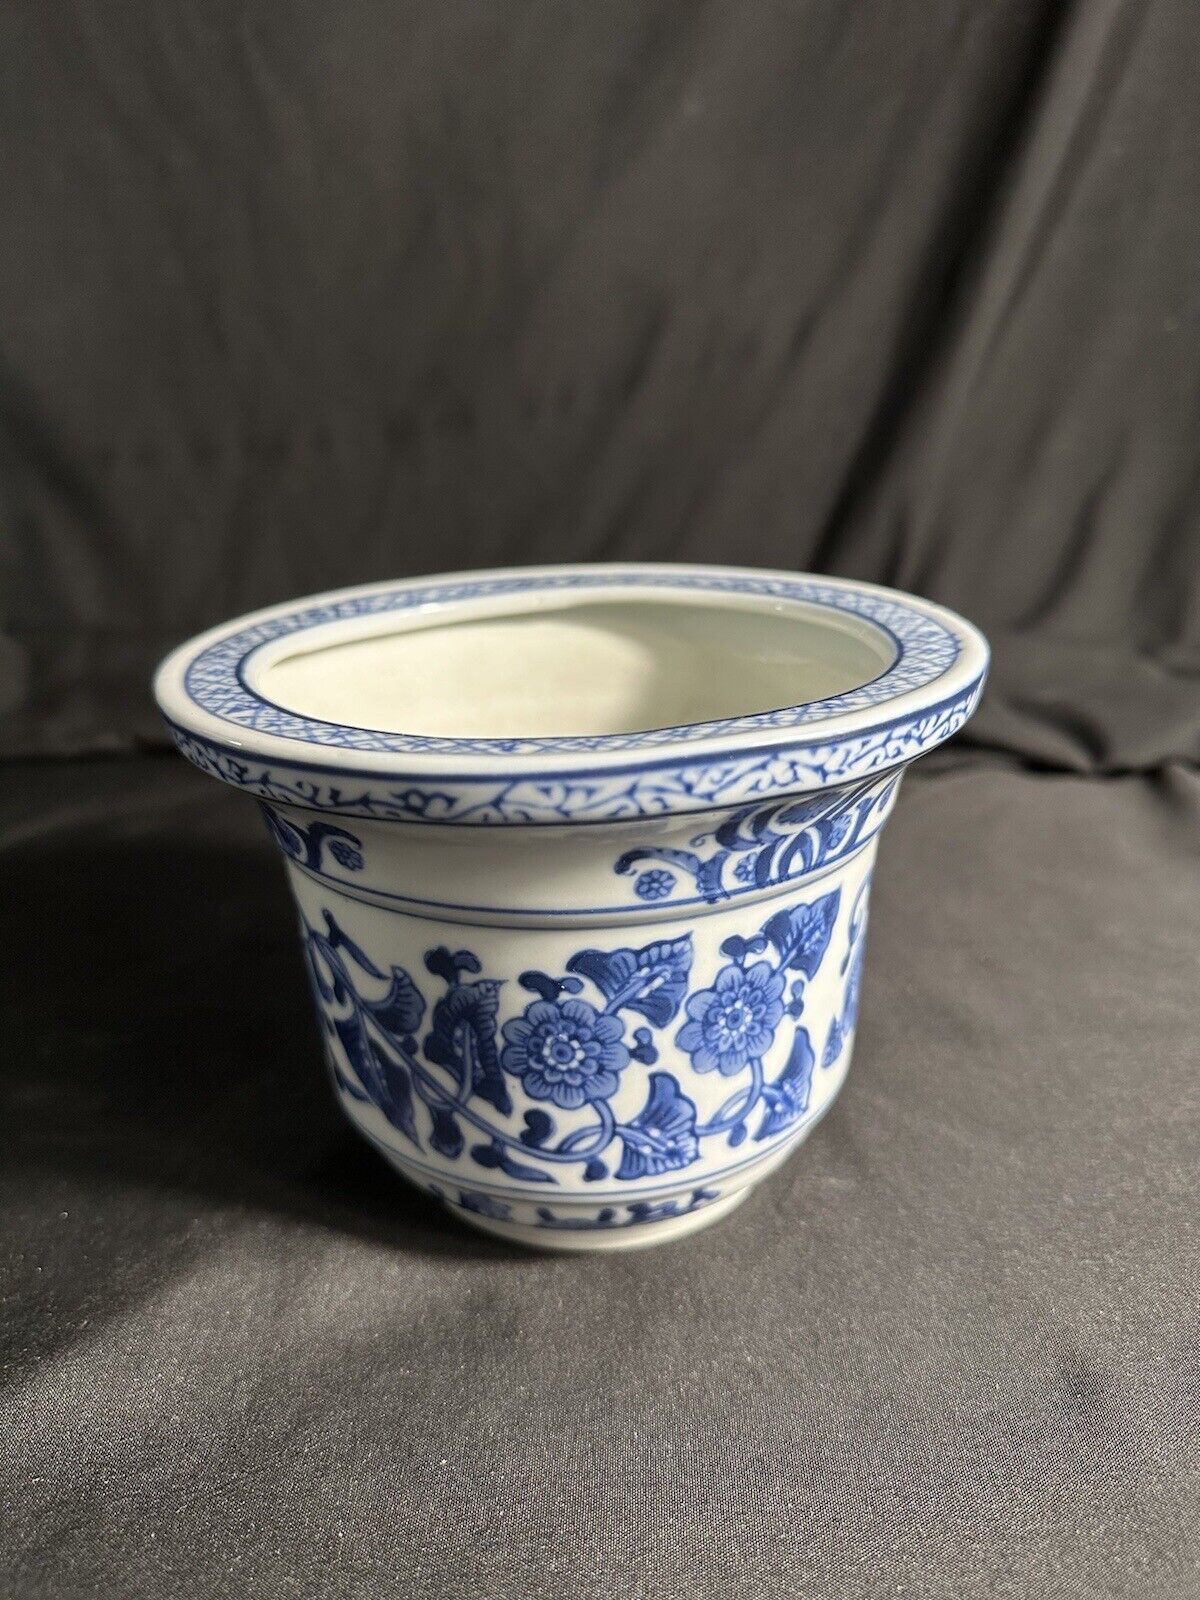 Vintage Chinese Blue & White Porcelain Planter 4” H x 5.5” diameter